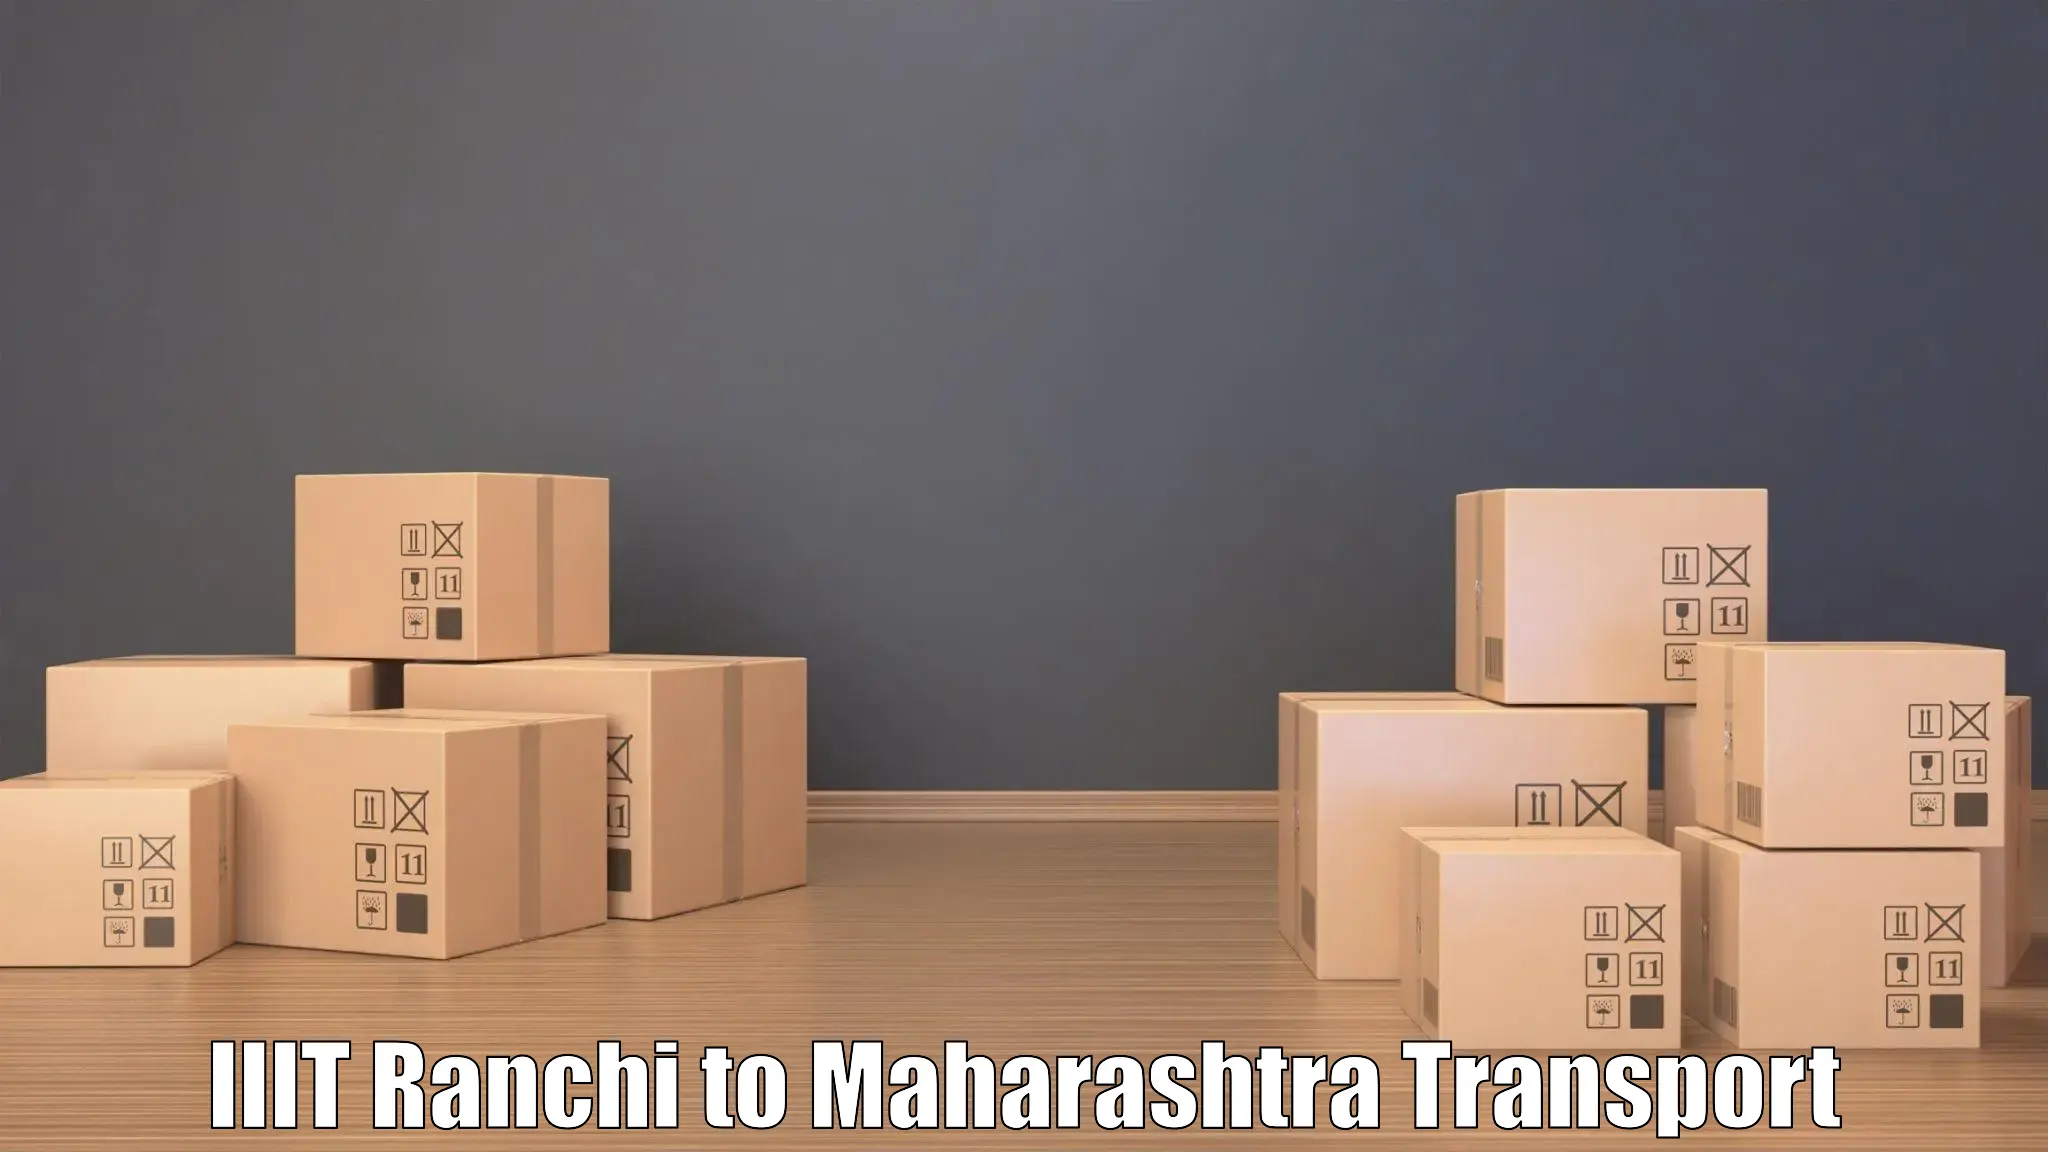 Online transport service IIIT Ranchi to Ahmednagar